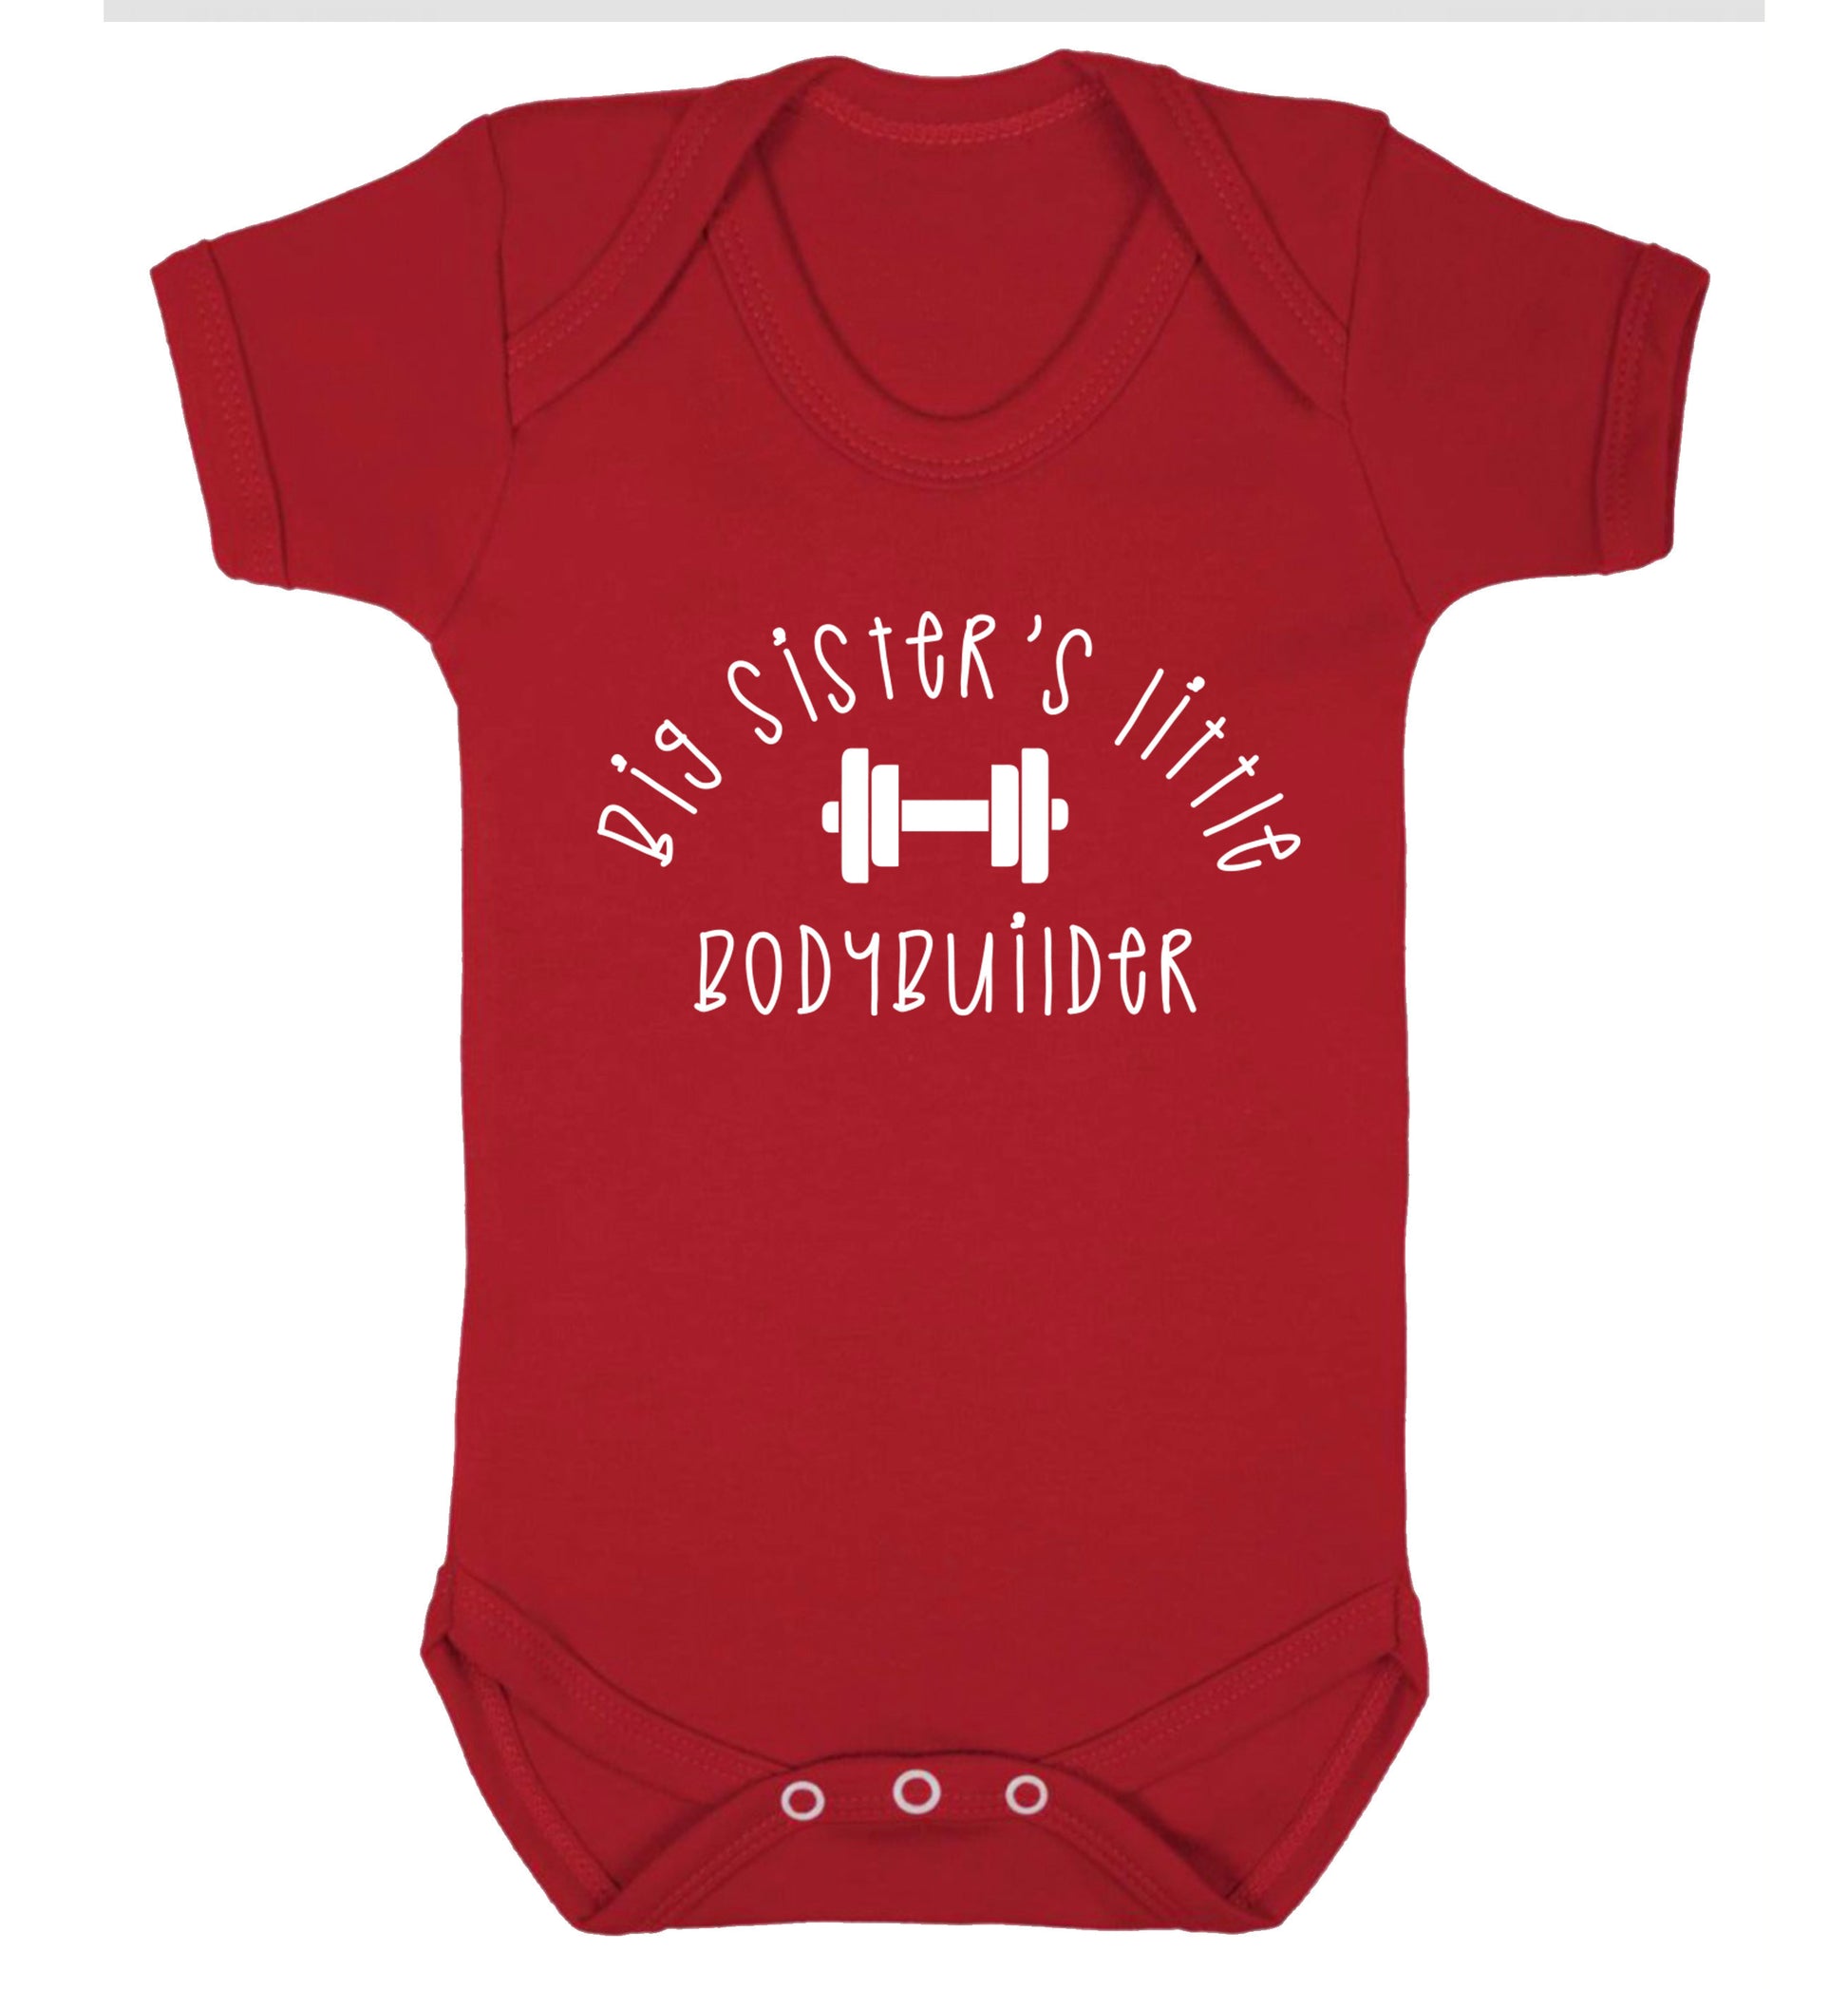 Big sister's little bodybuilder Baby Vest red 18-24 months